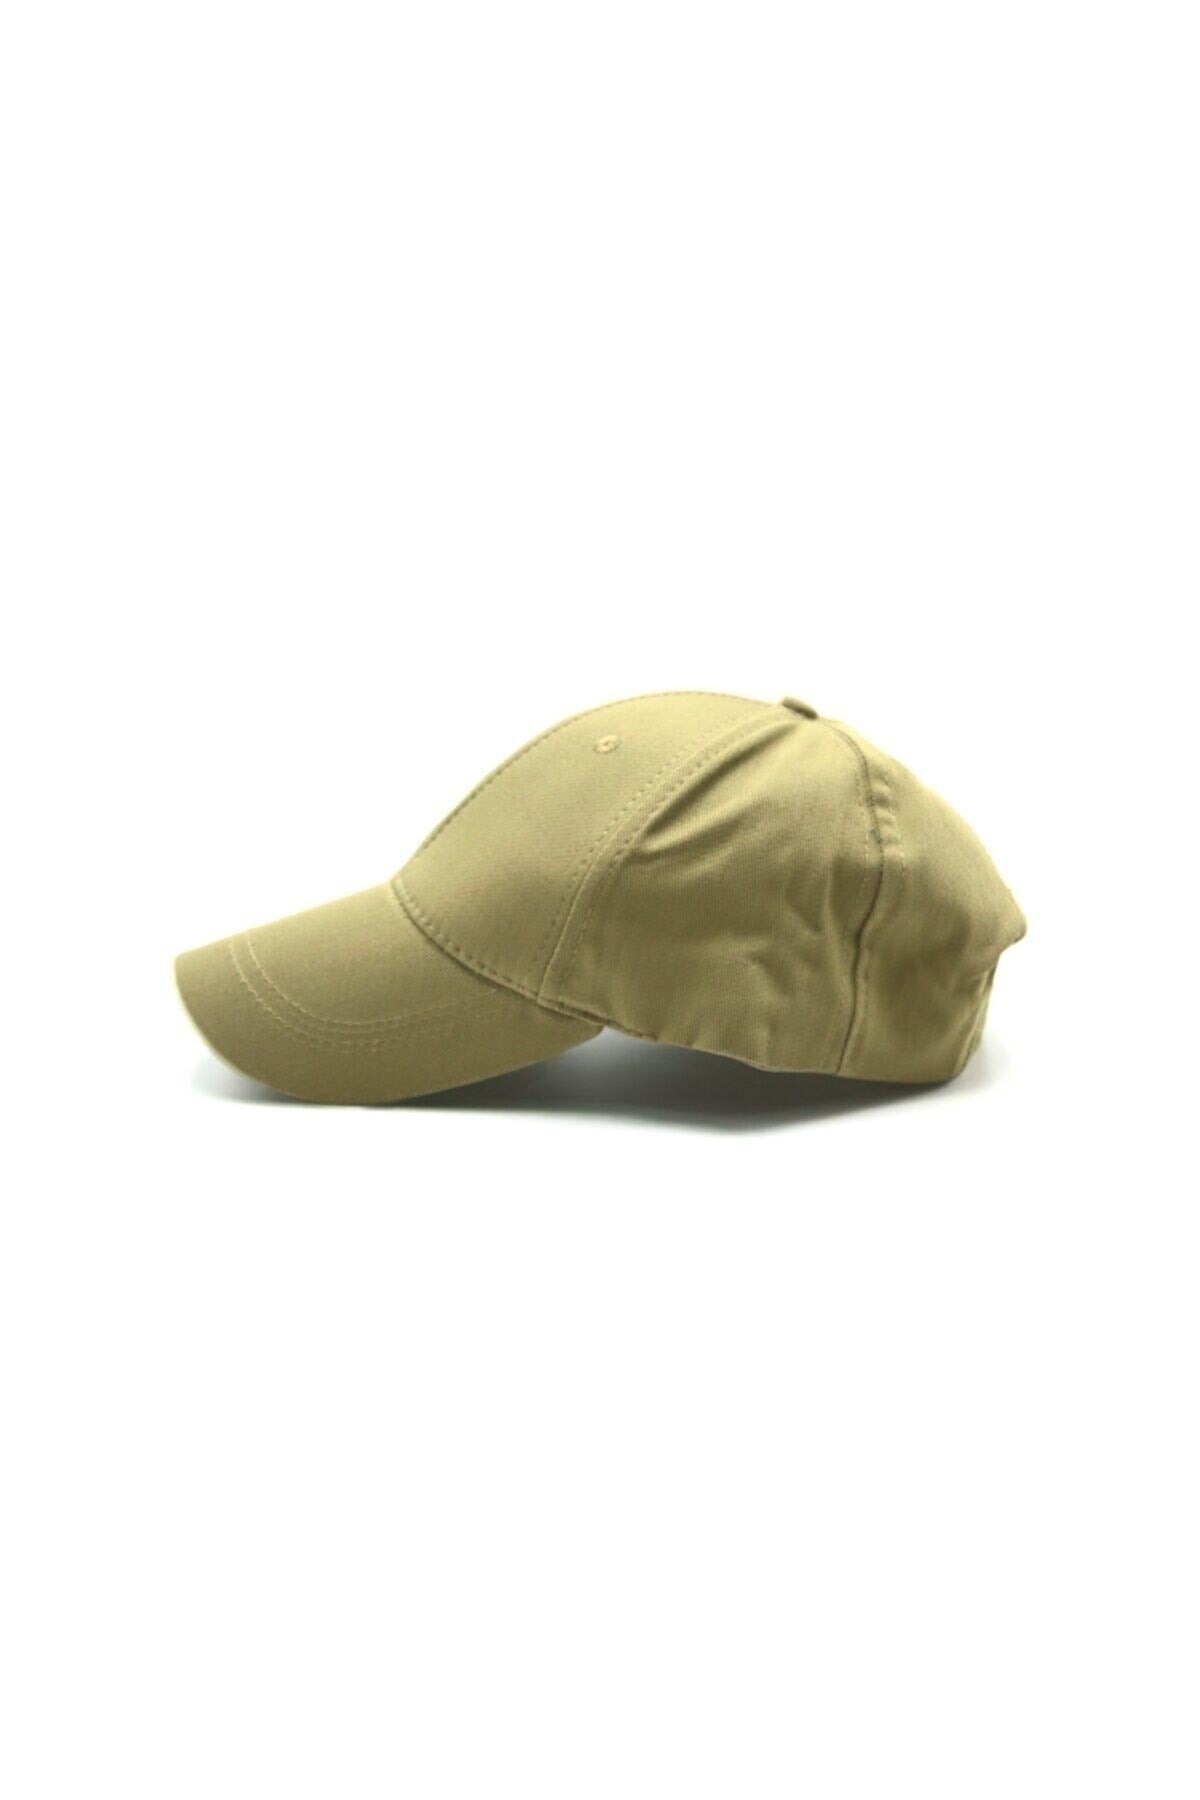 Adjustable Men's-Women's Plain Sports Hat with Velcro Back